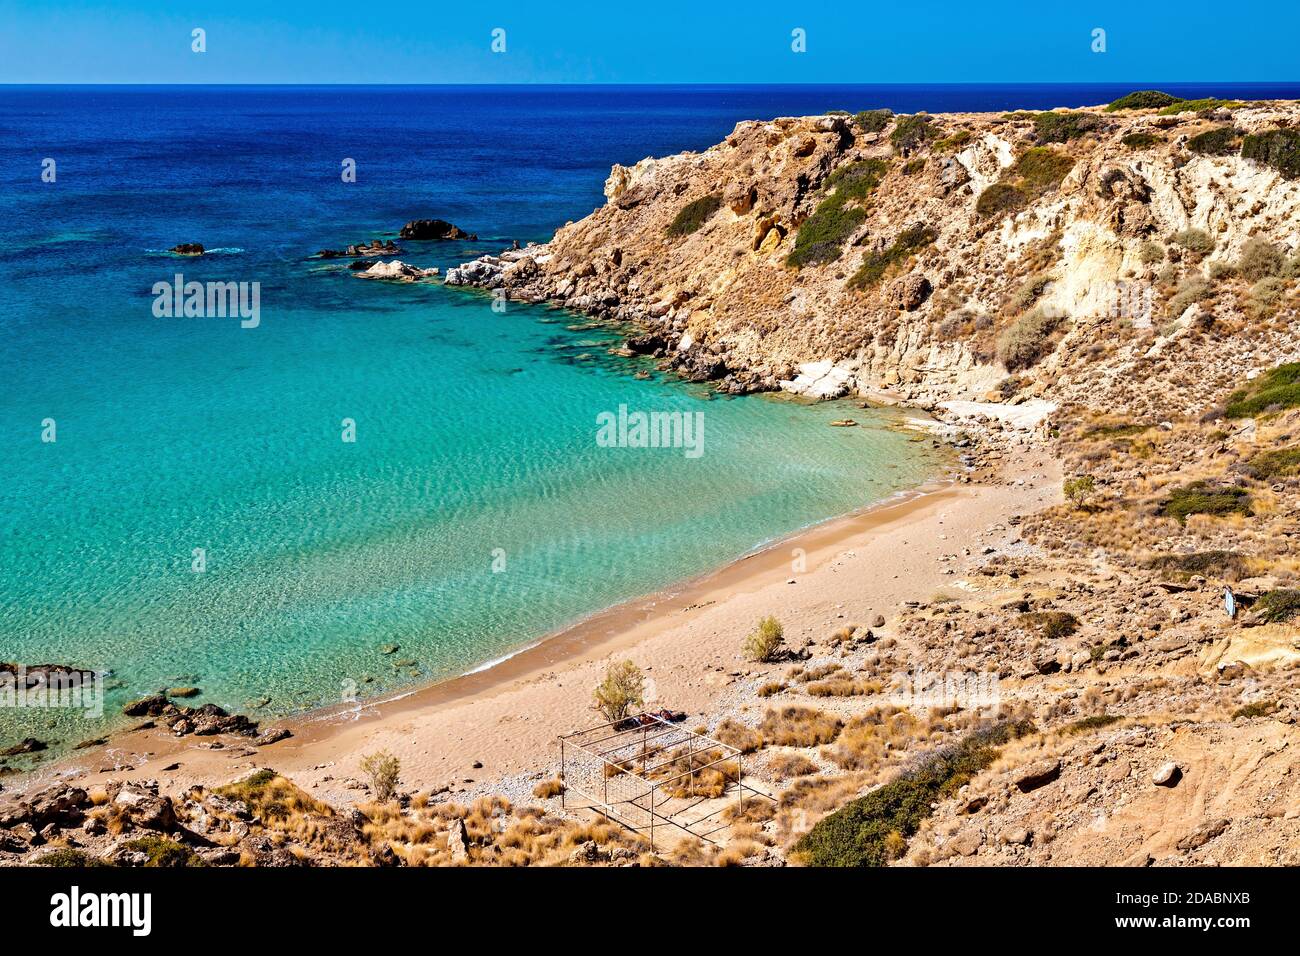 Ammoudi beach (also known as 'Dragon's'), somewhere between Makrygialos and Goudouras villages, Sitia municipality, Lassithi, Southern Crete, Greece. Stock Photo